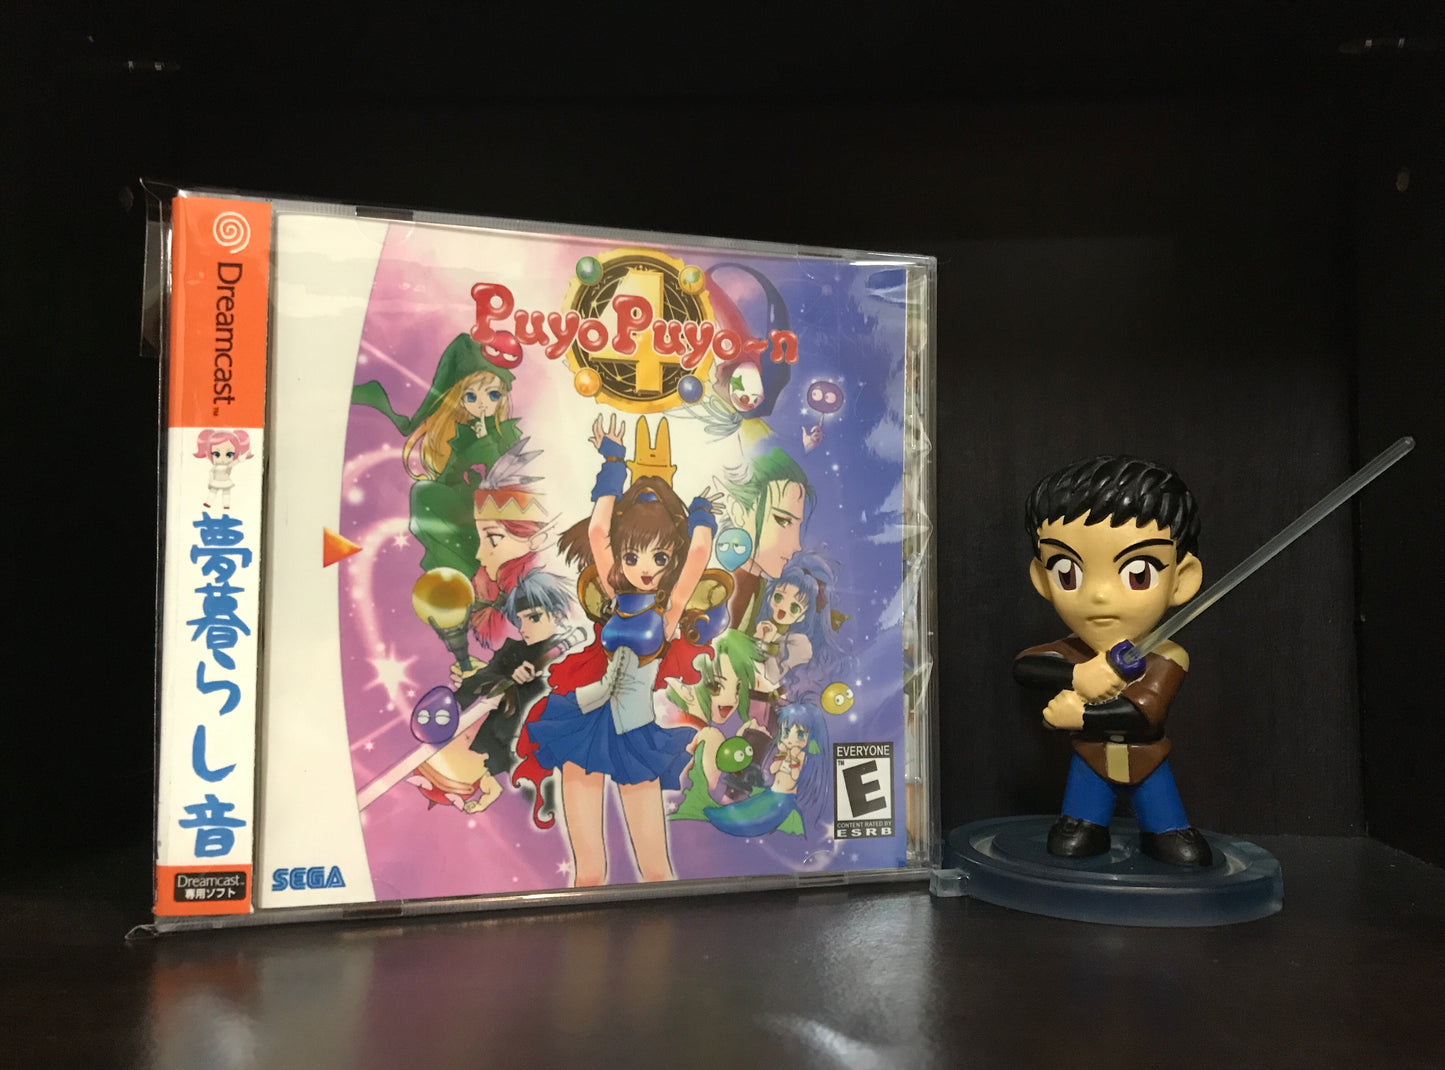 Puyo Puyo 4 (English Translation) [Sega Dreamcast] Reproduction